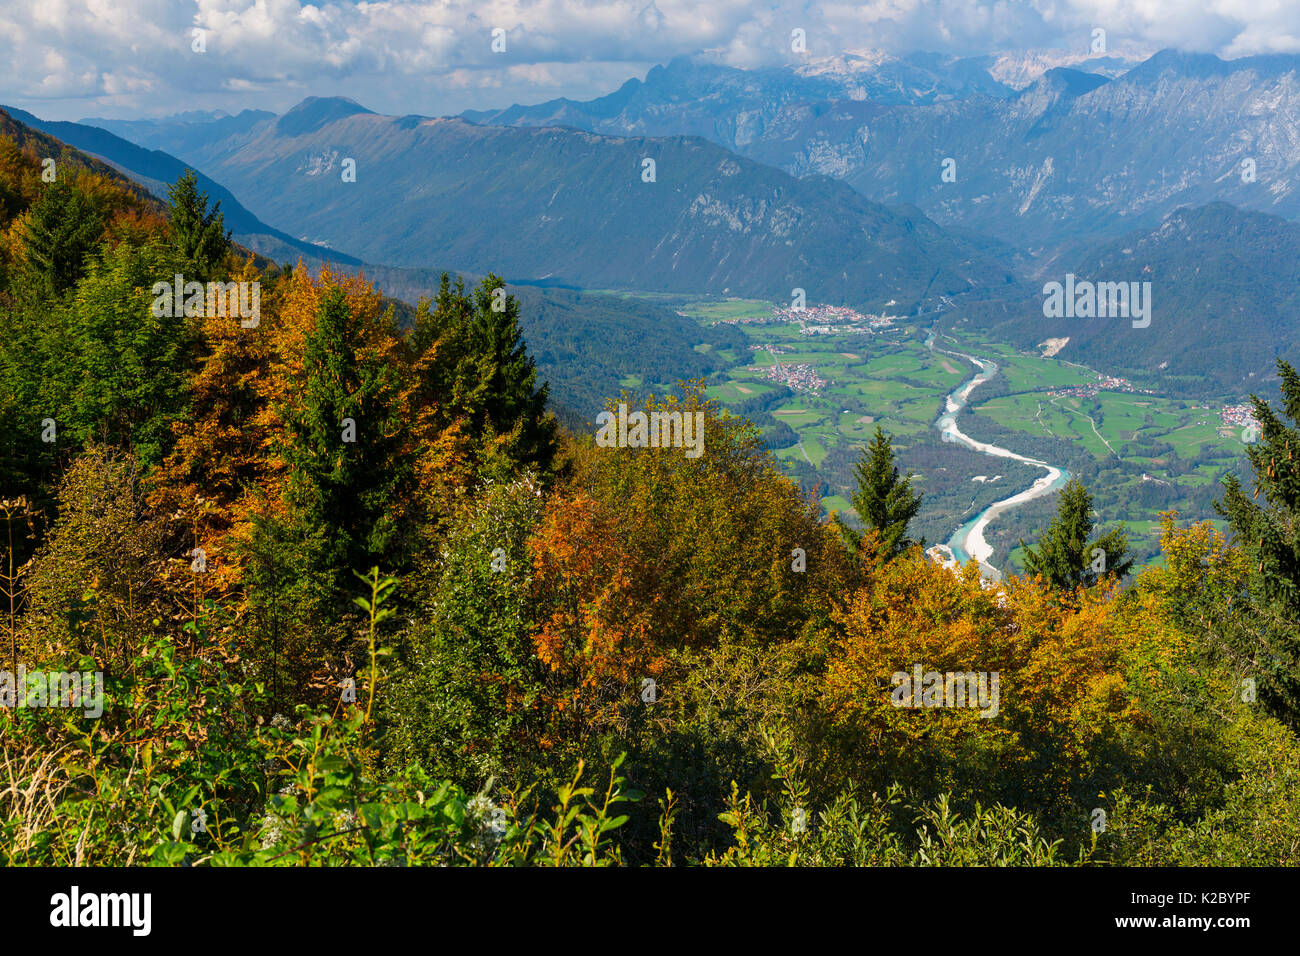 Kobarid et la rivière Soca dans la vallée de la soca, les Alpes Juliennes, en Slovénie, octobre 2014. Banque D'Images